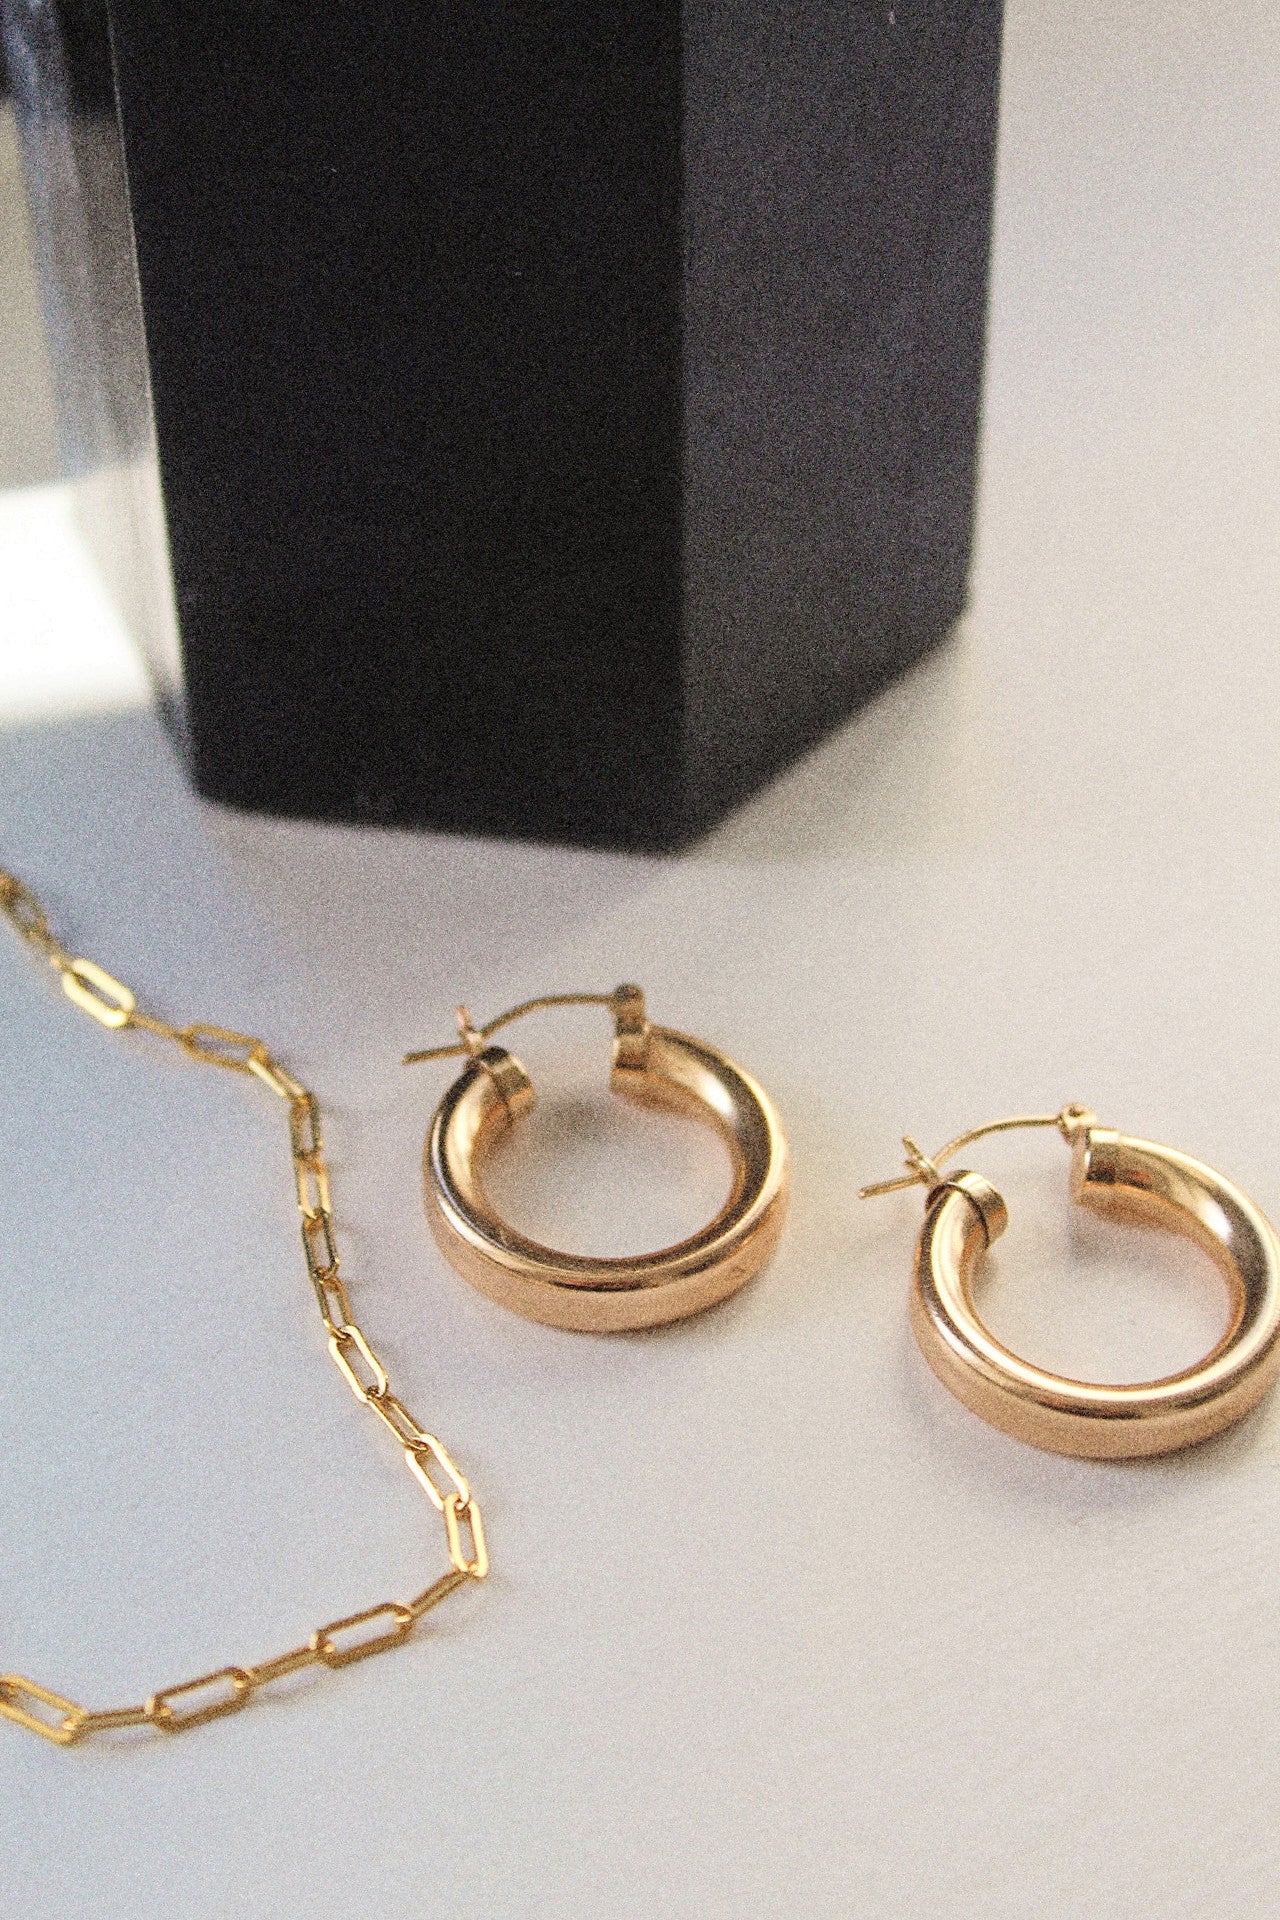 14k Gold Paper Clip Chain Bracelet - Jewellery Hut